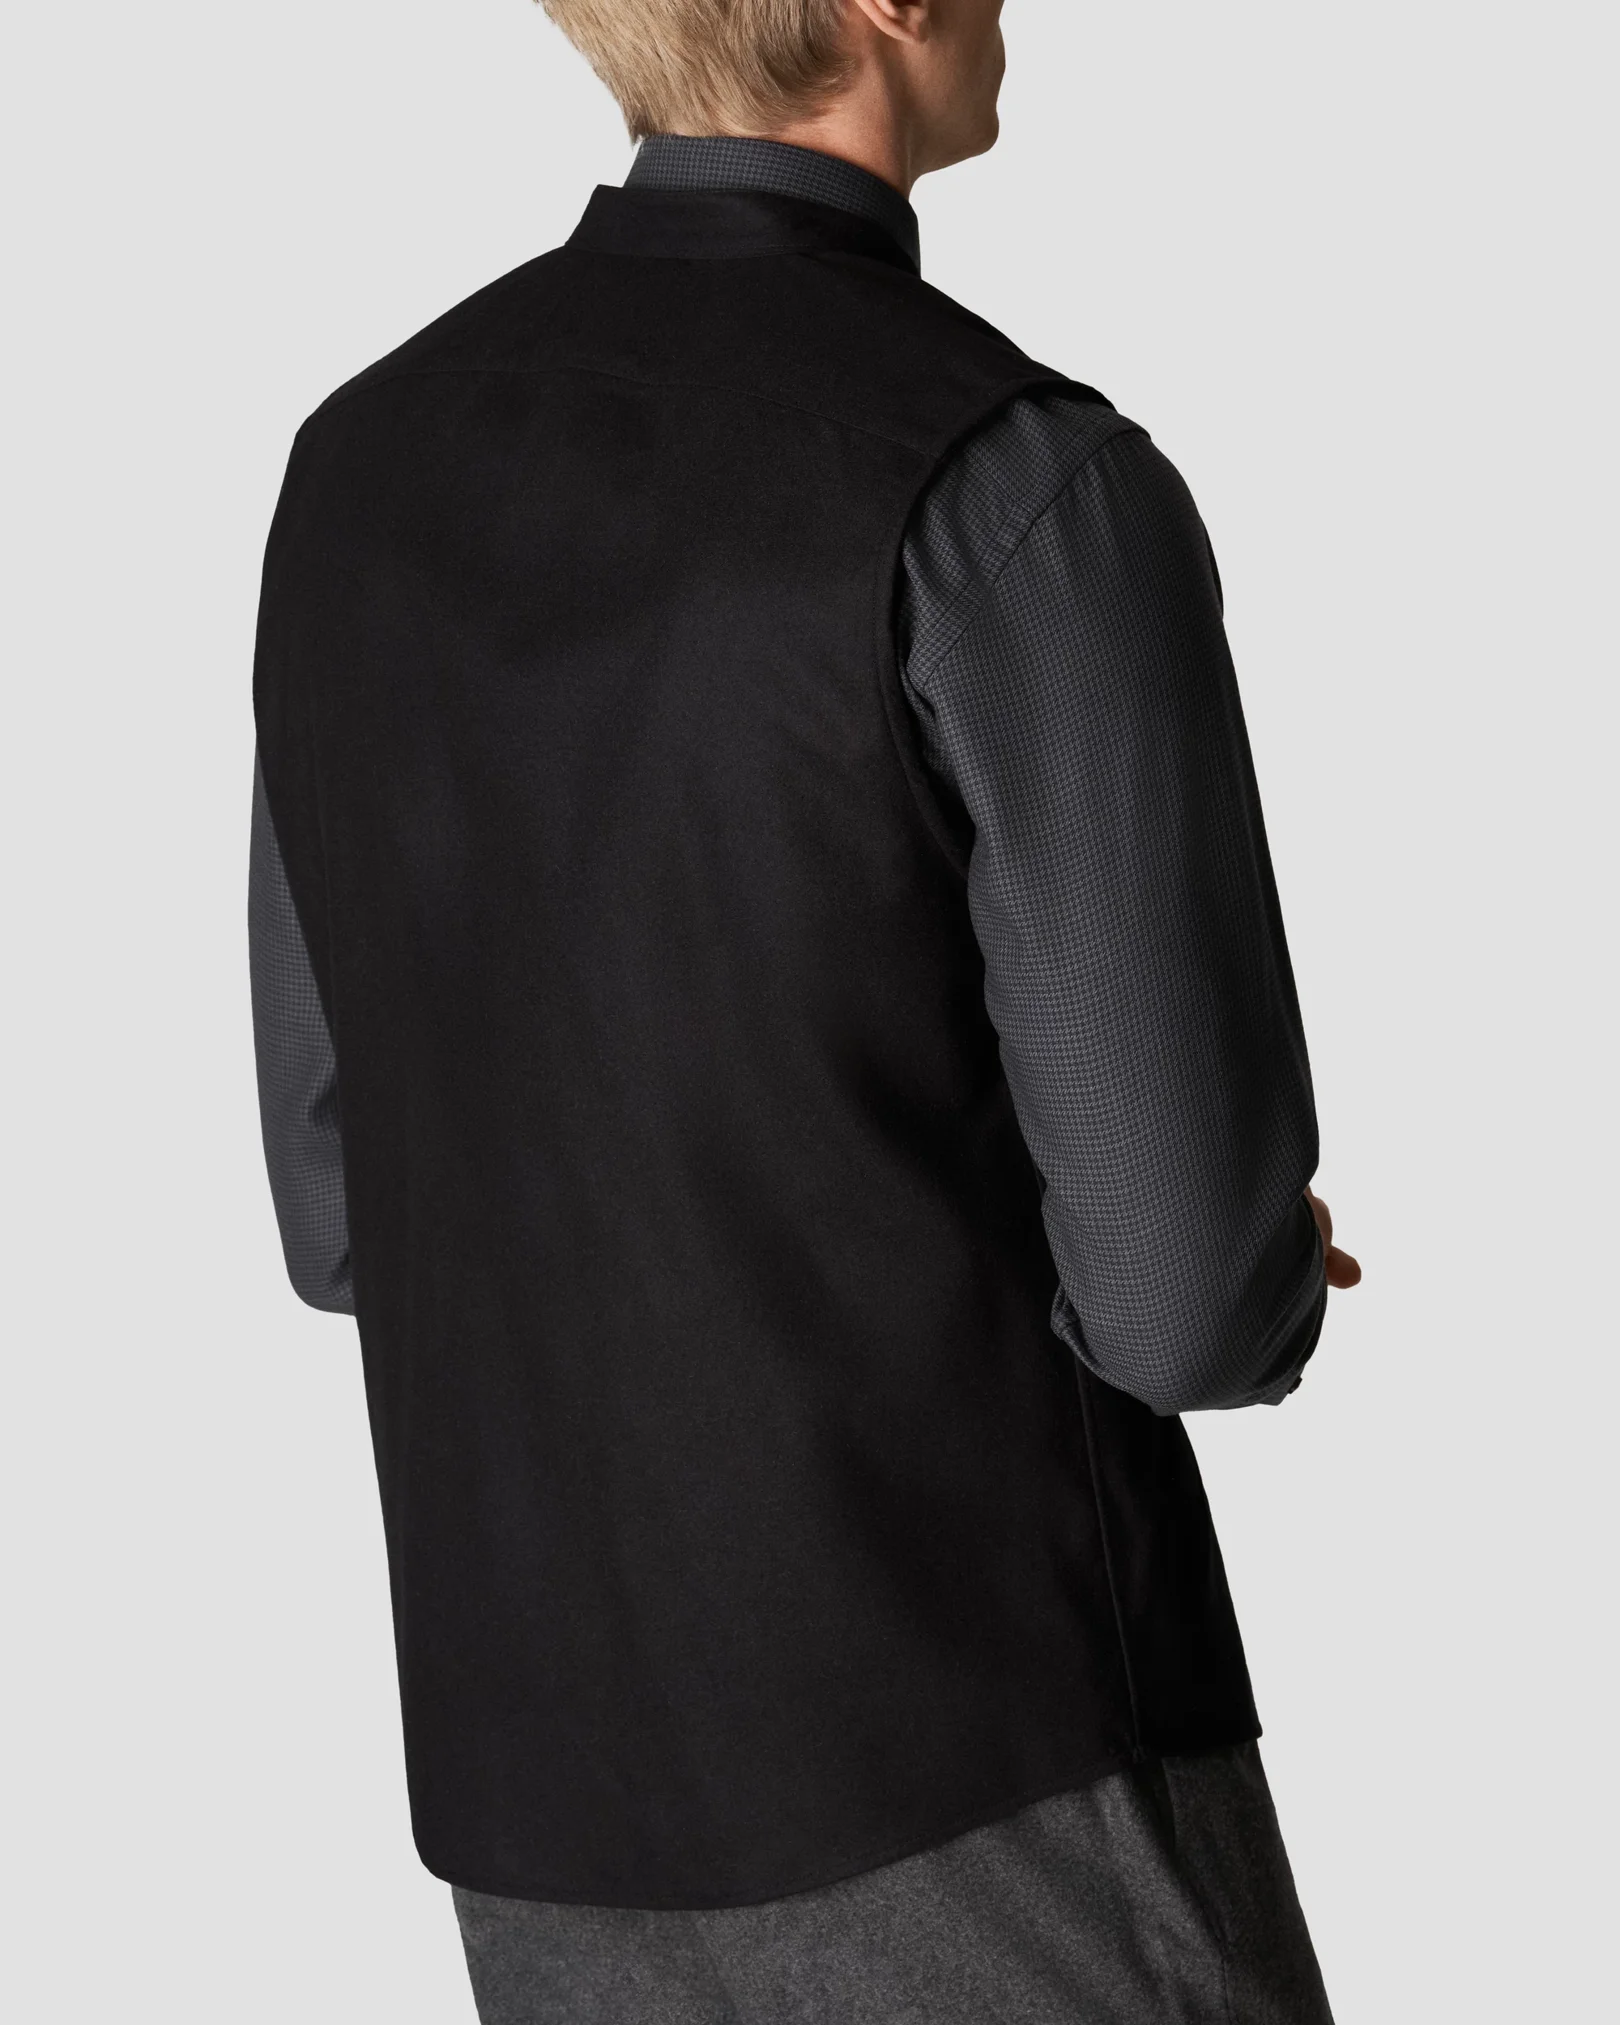 Eton - black twill wool vest